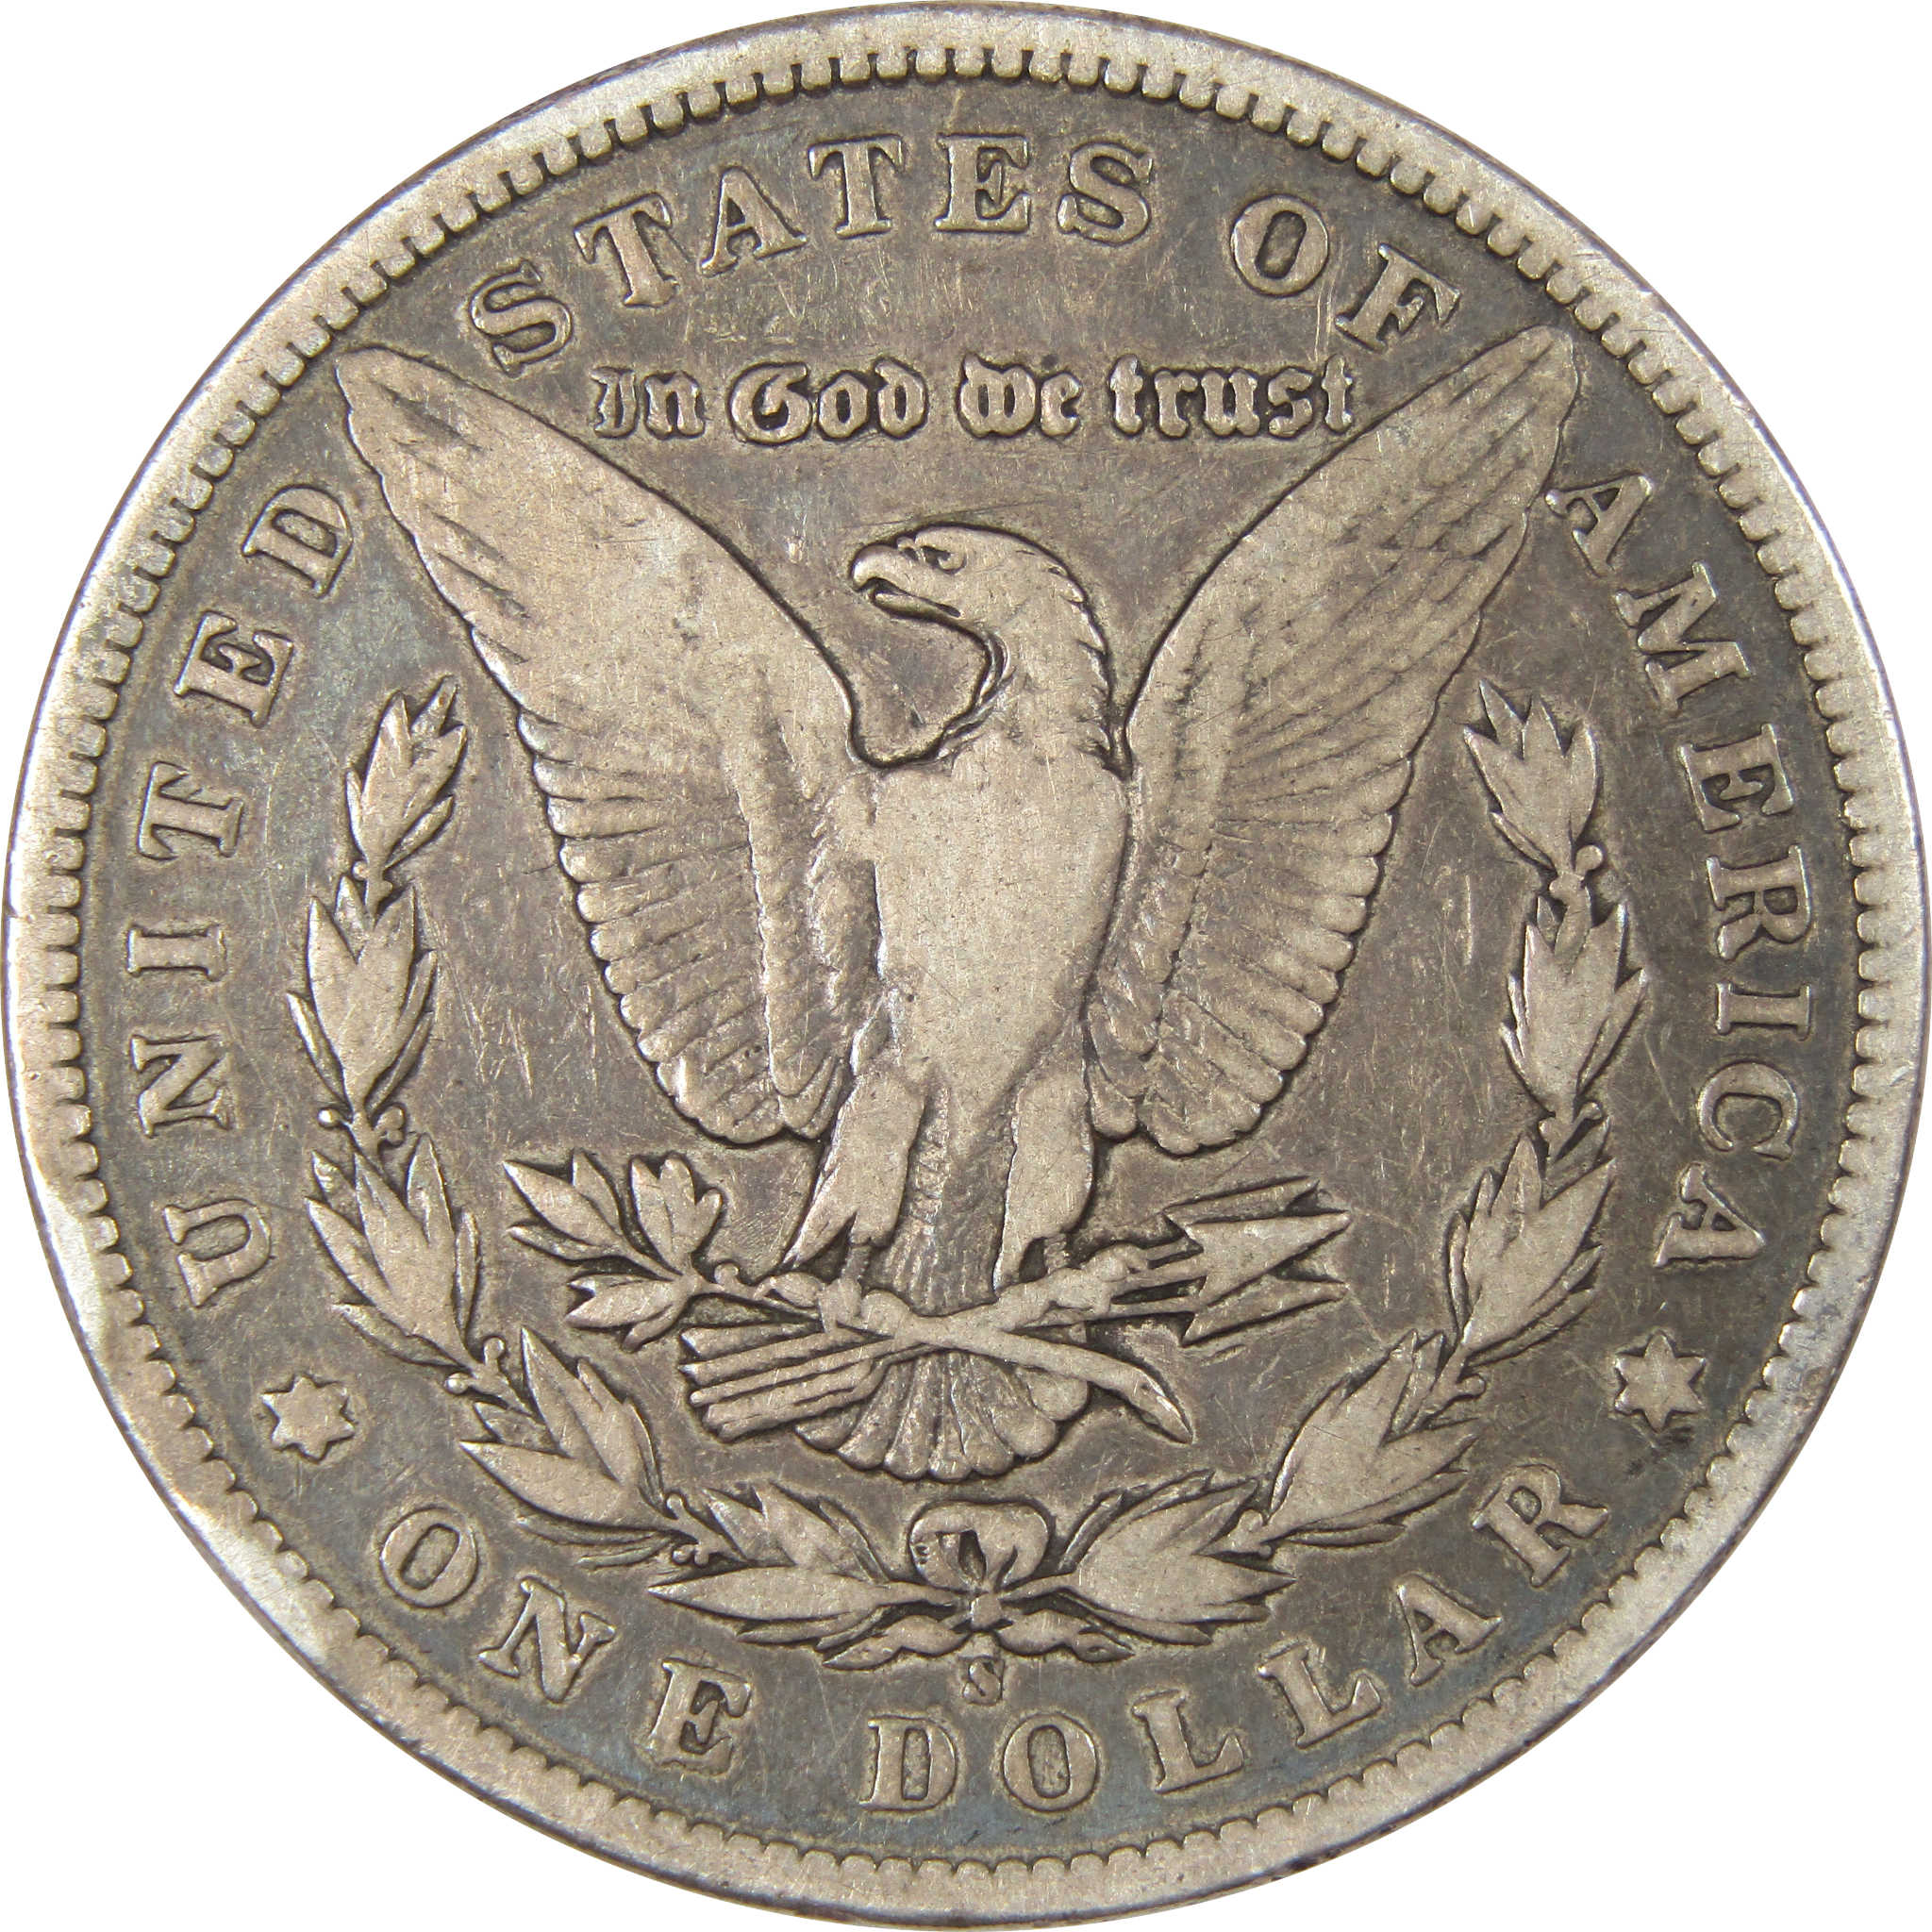 1898 S Morgan Dollar VG Very Good 90% Silver US Coin SKU:IPC8313 - Morgan coin - Morgan silver dollar - Morgan silver dollar for sale - Profile Coins &amp; Collectibles